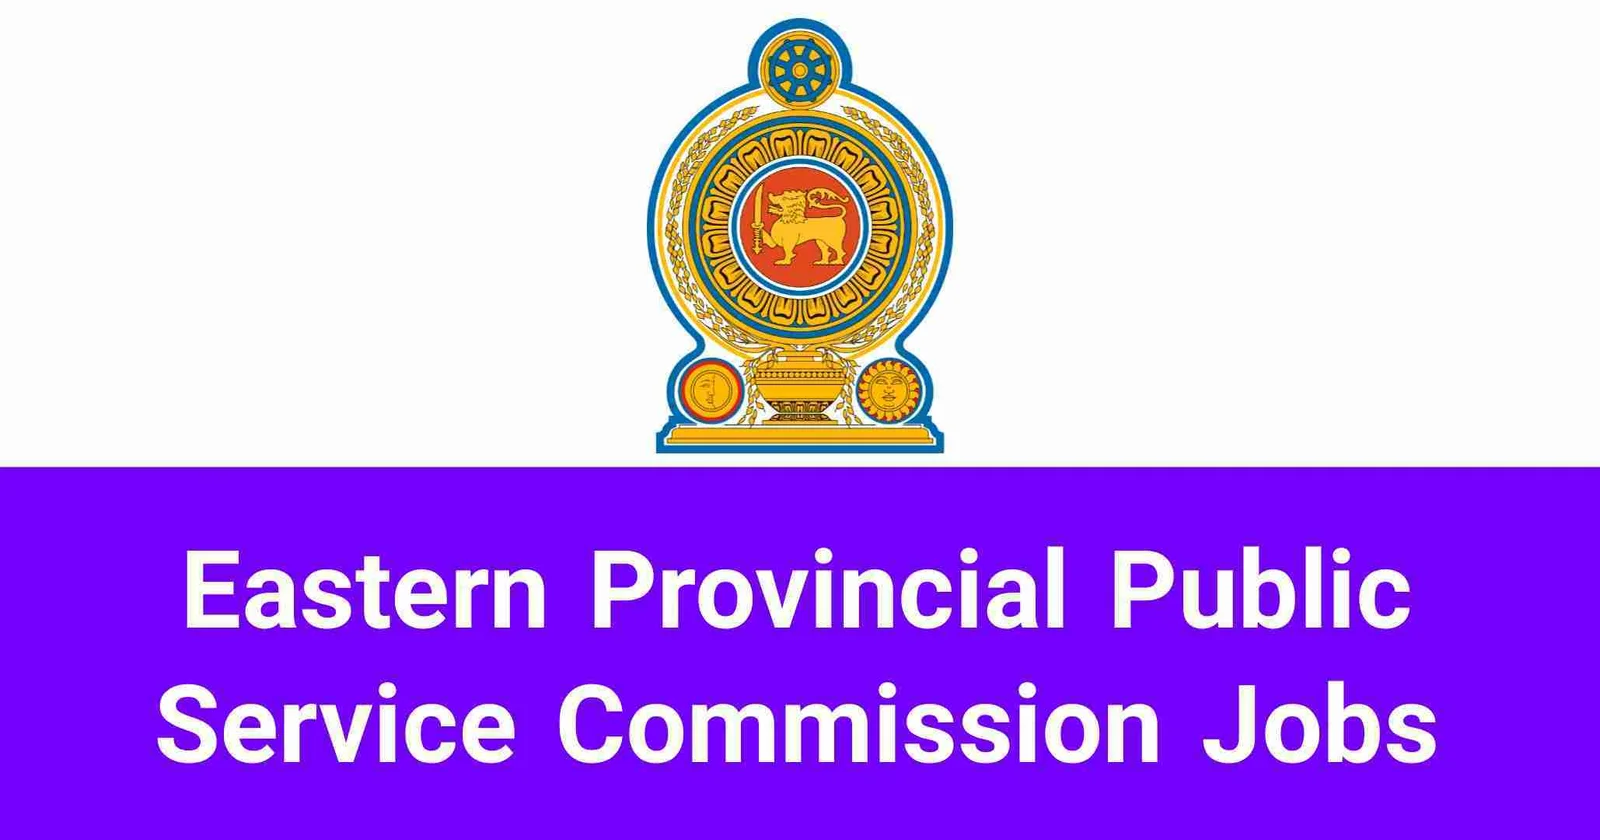 Eastern Provincial Public Service Commission Jobs Vacancies